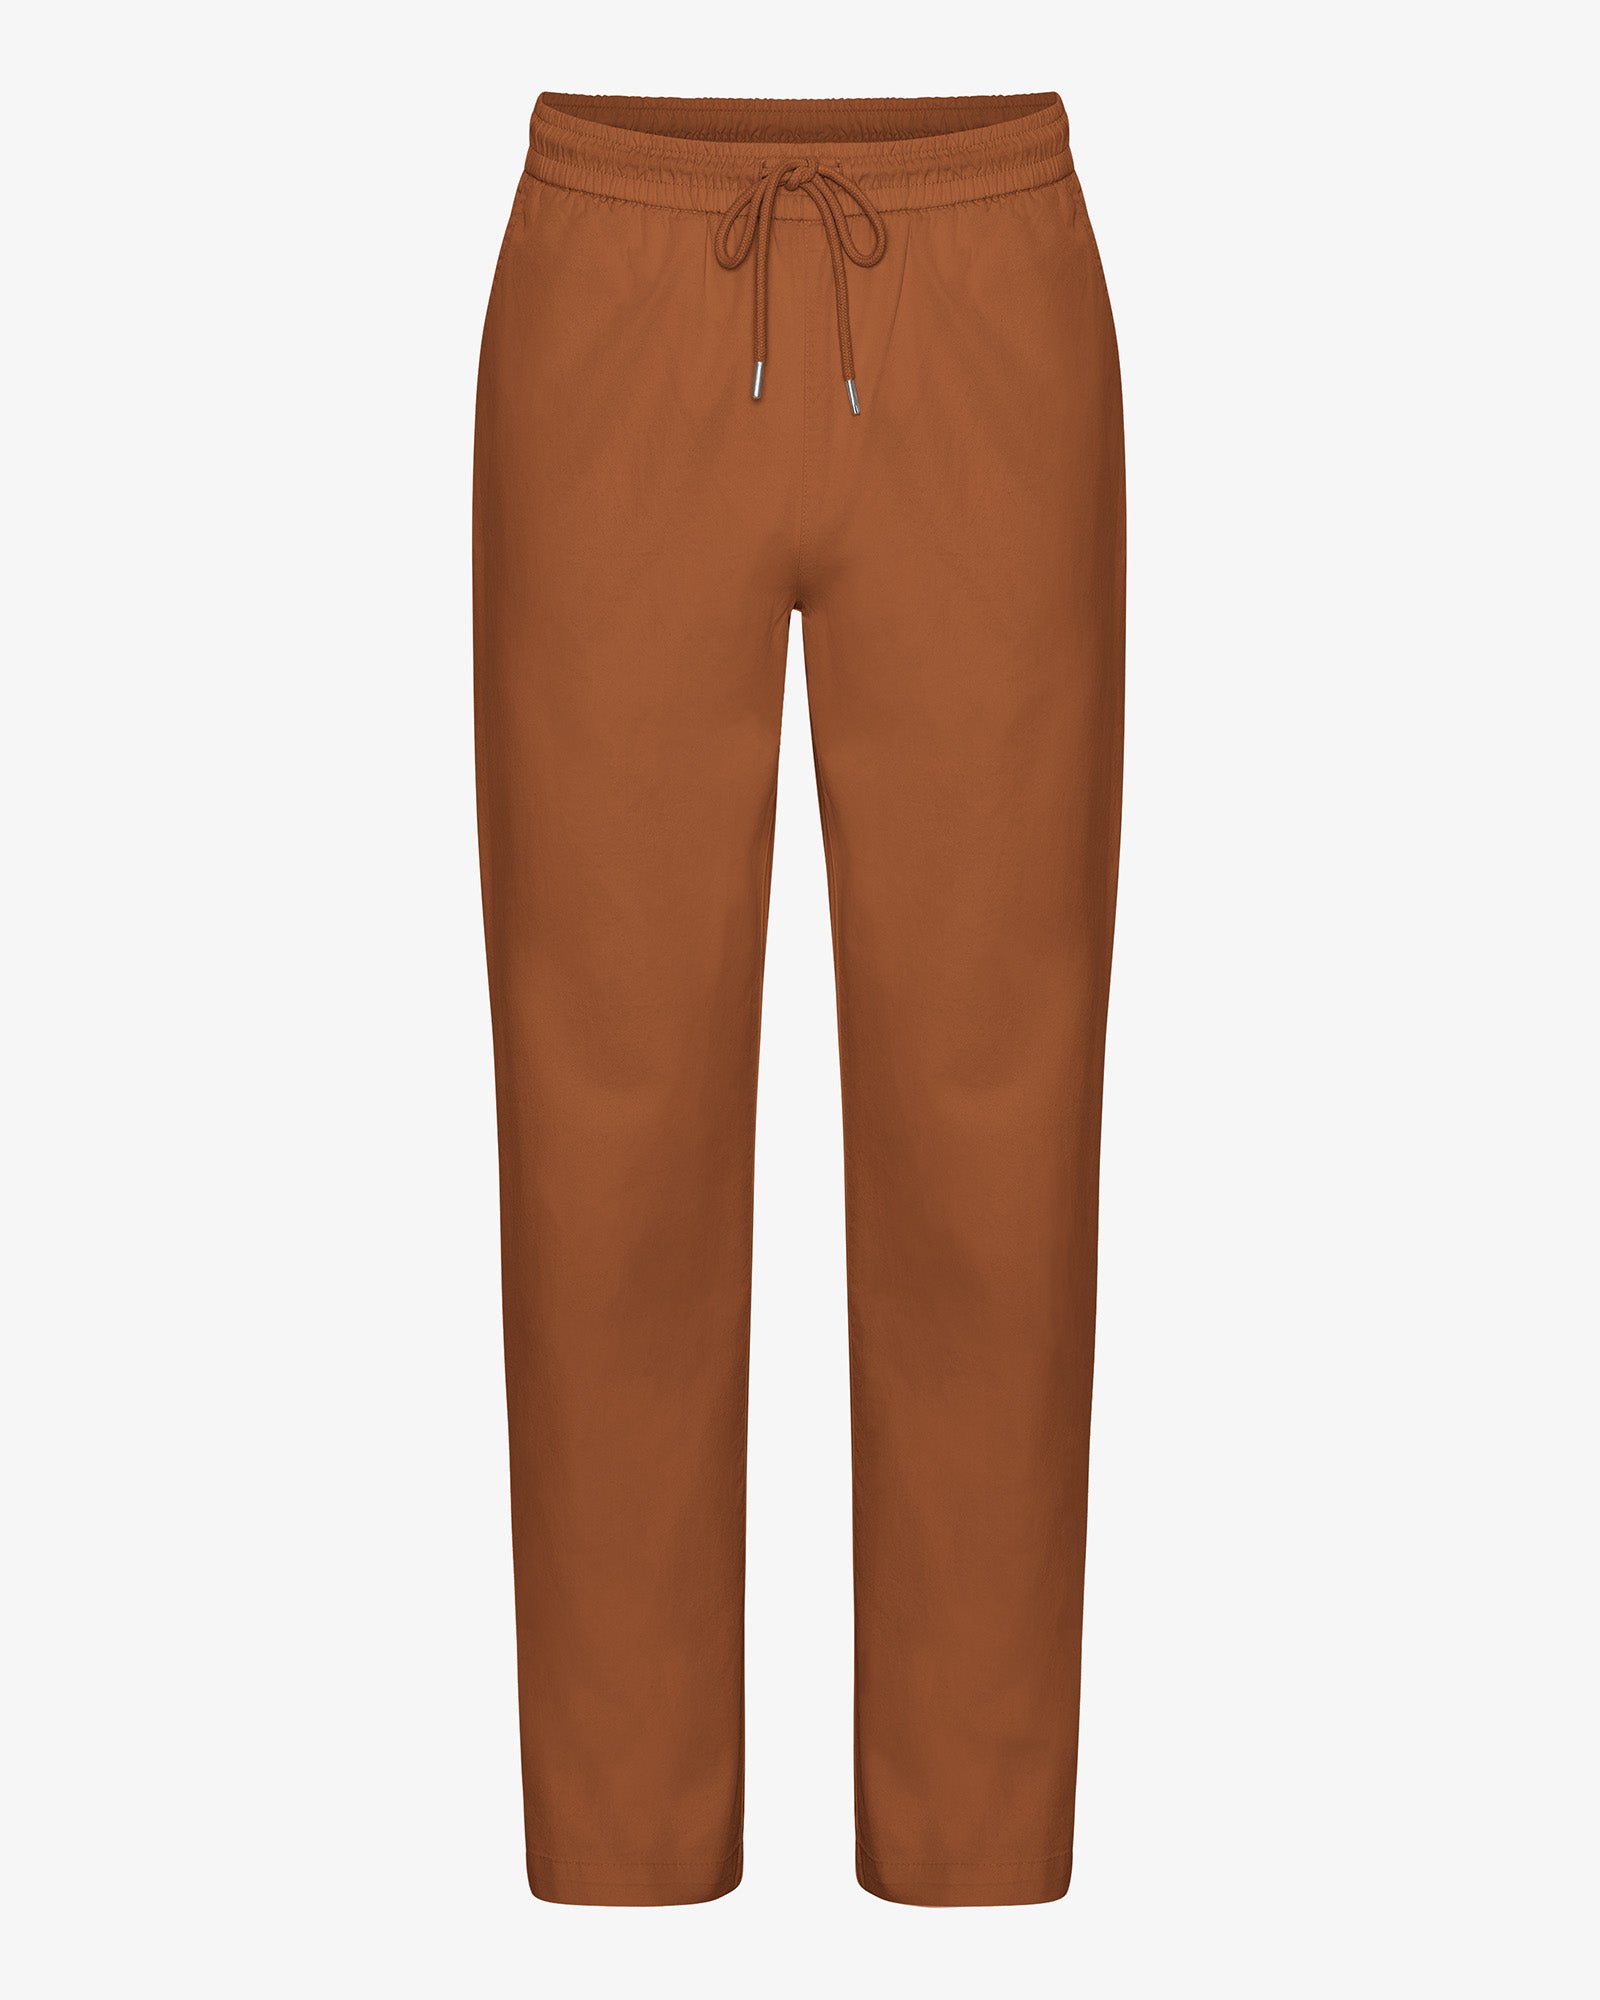 Organic Twill Pants - Ginger Brown